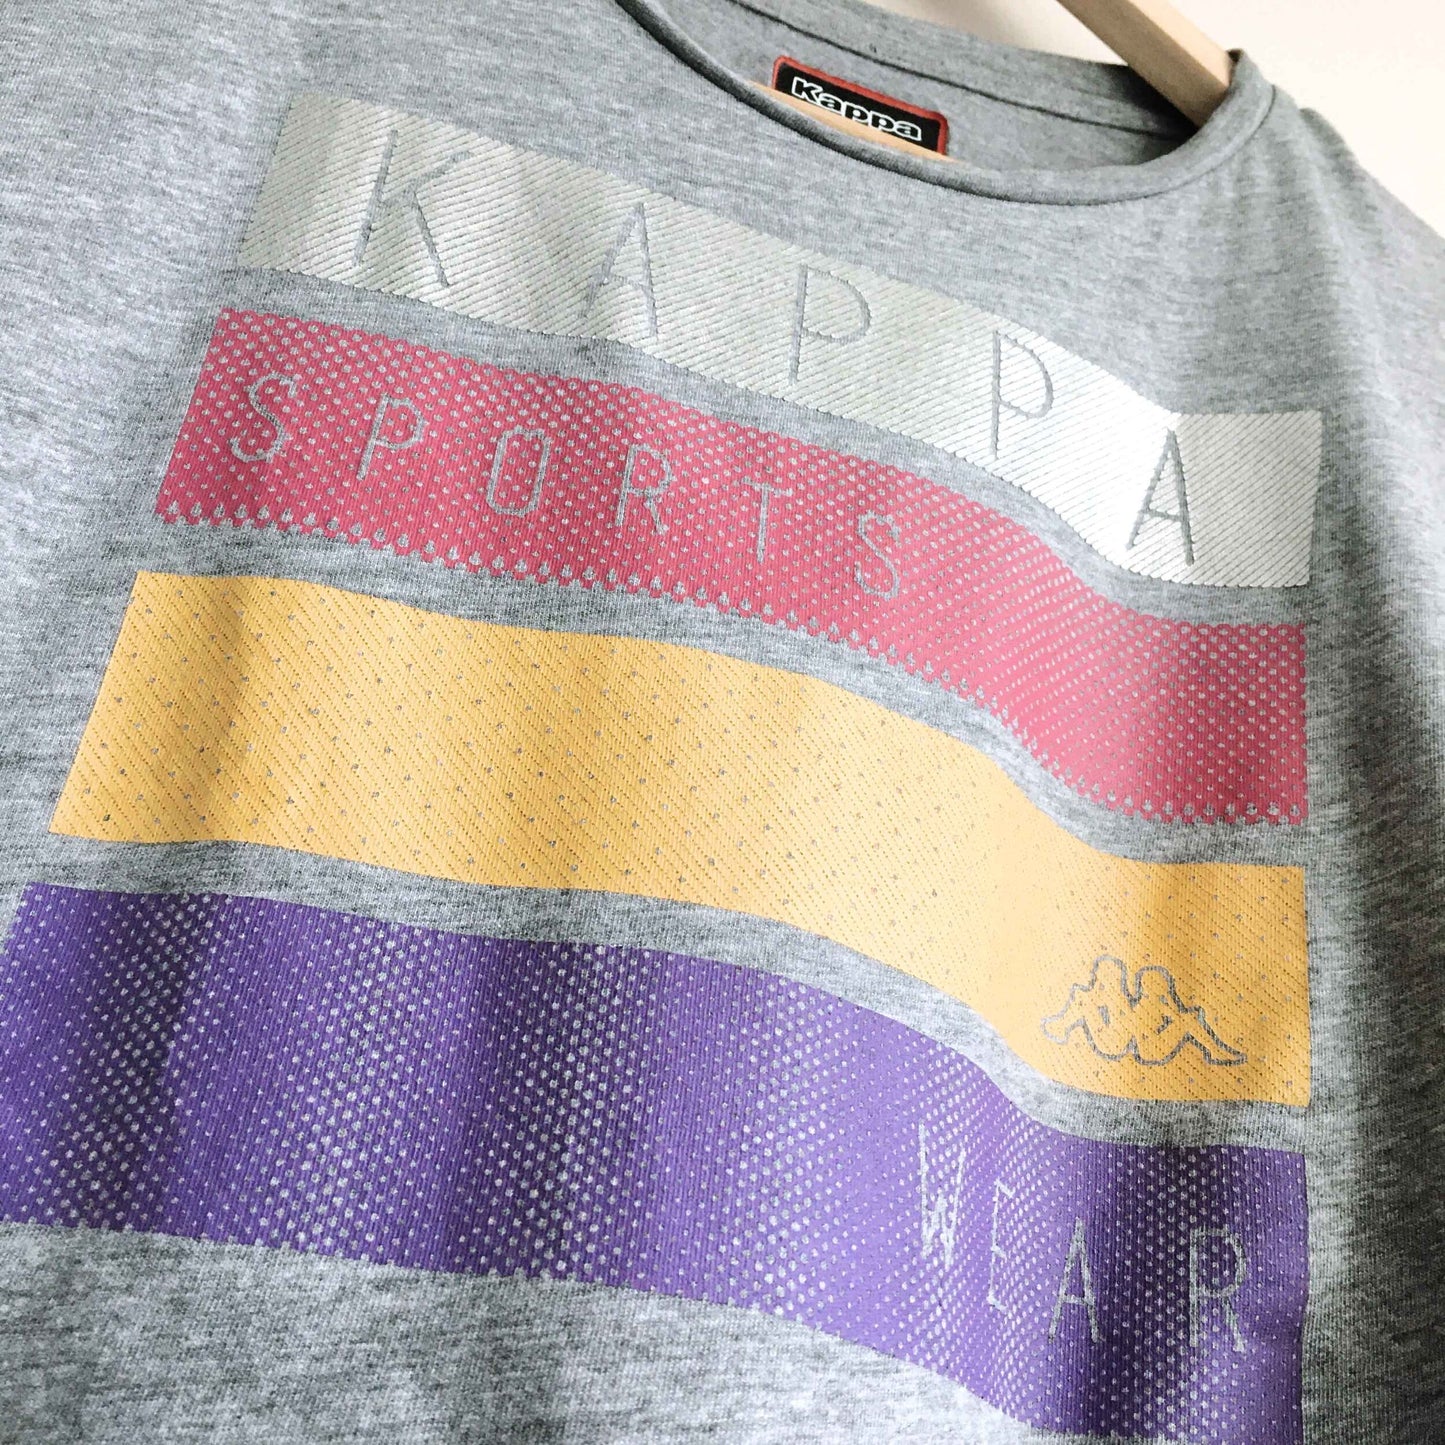 Kappa sportswear crop graphic tee - size Small